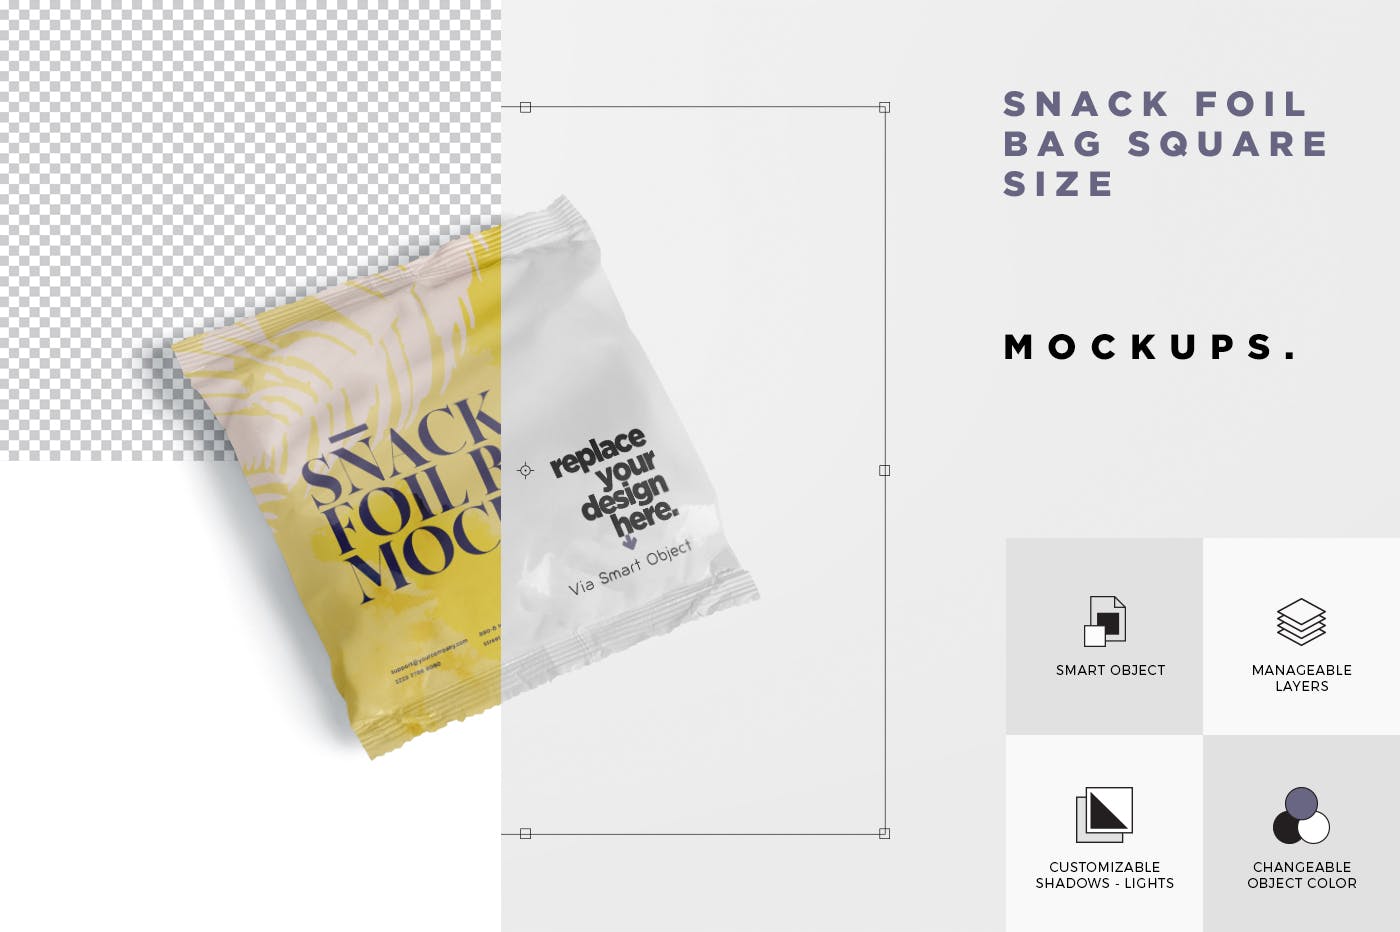 小吃零食铝箔包装袋设计图素材库精选 Snack Foil Bag Mockup – Square Size – Small插图(6)